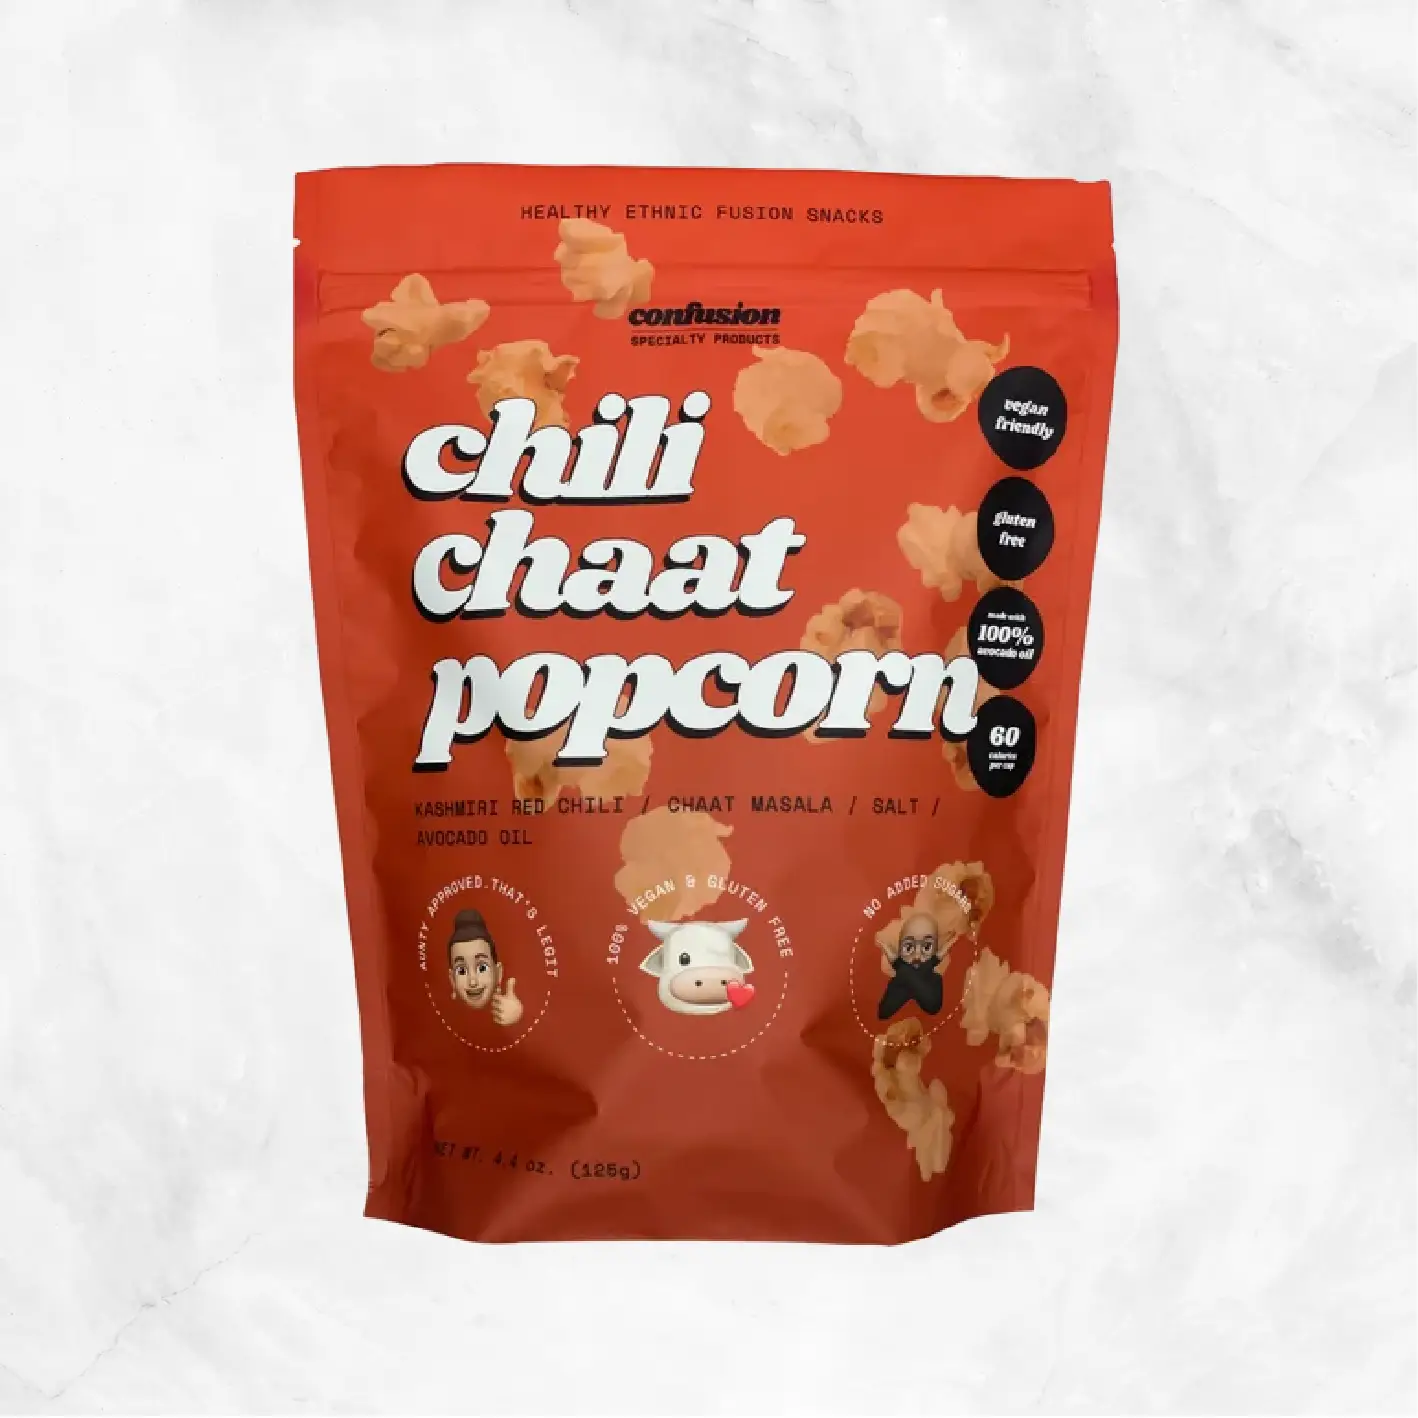 Chili Chaat Popcorn